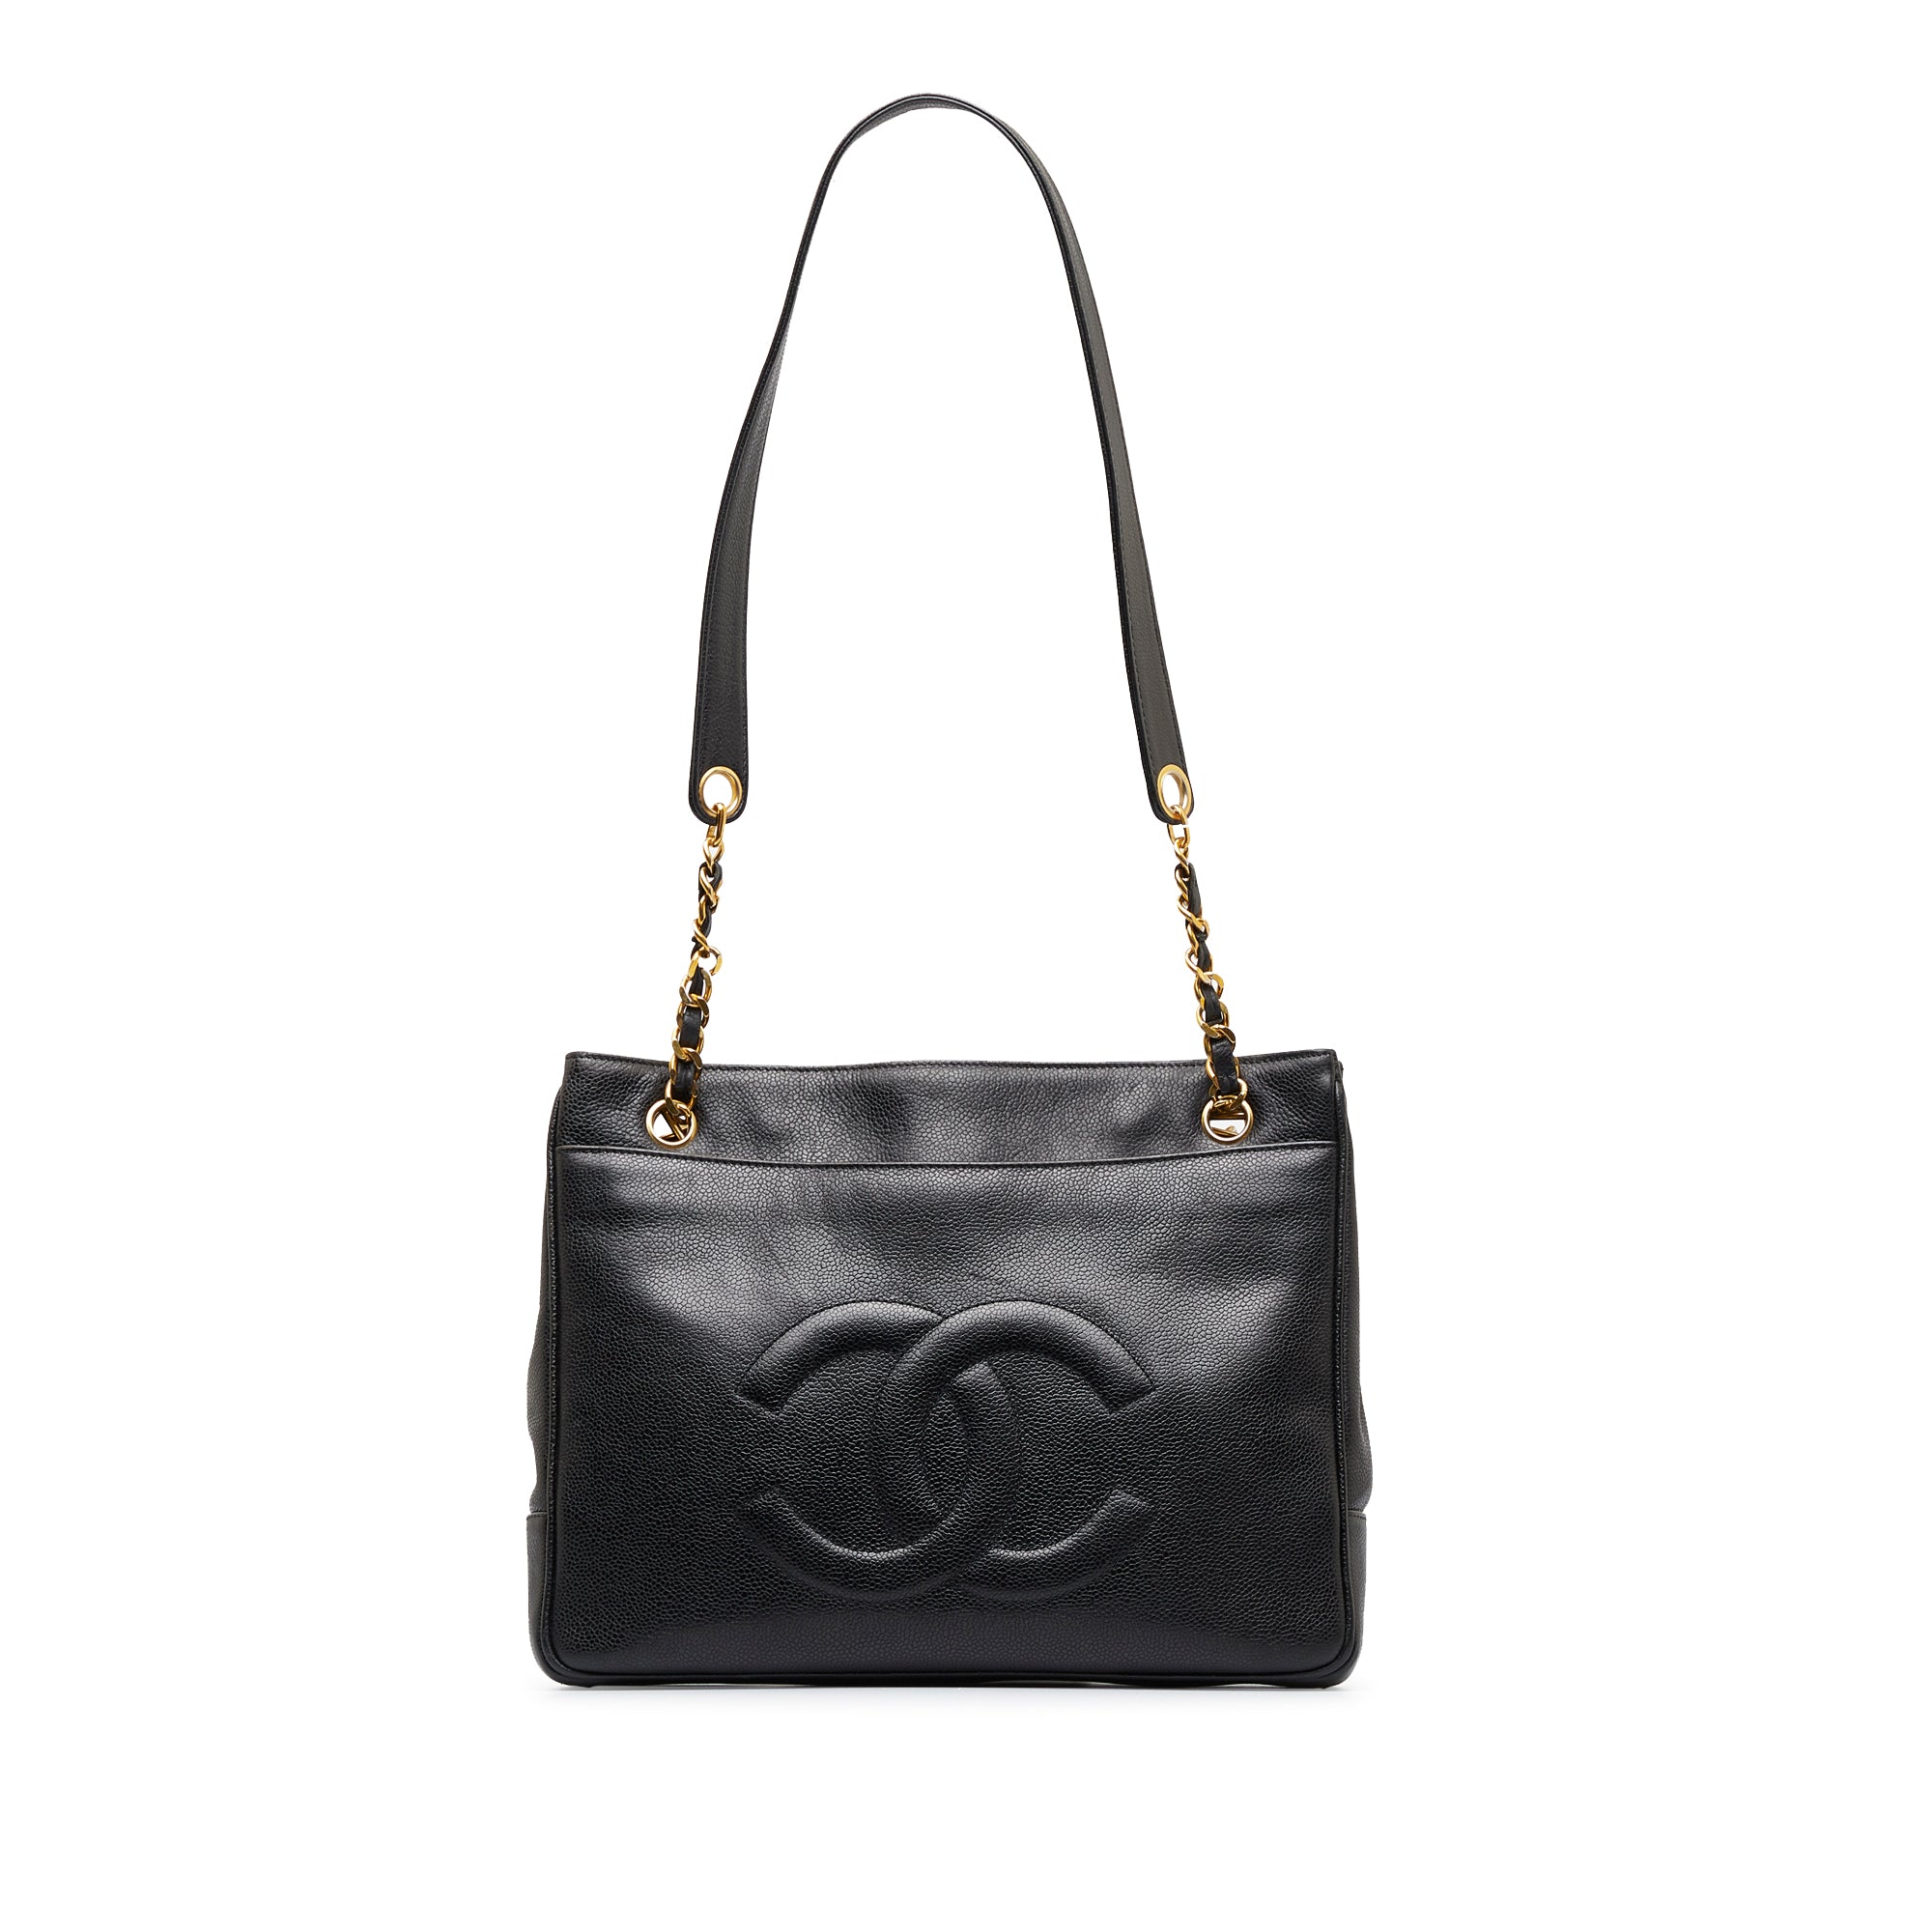 Chanel Vintage CC Tote Bag